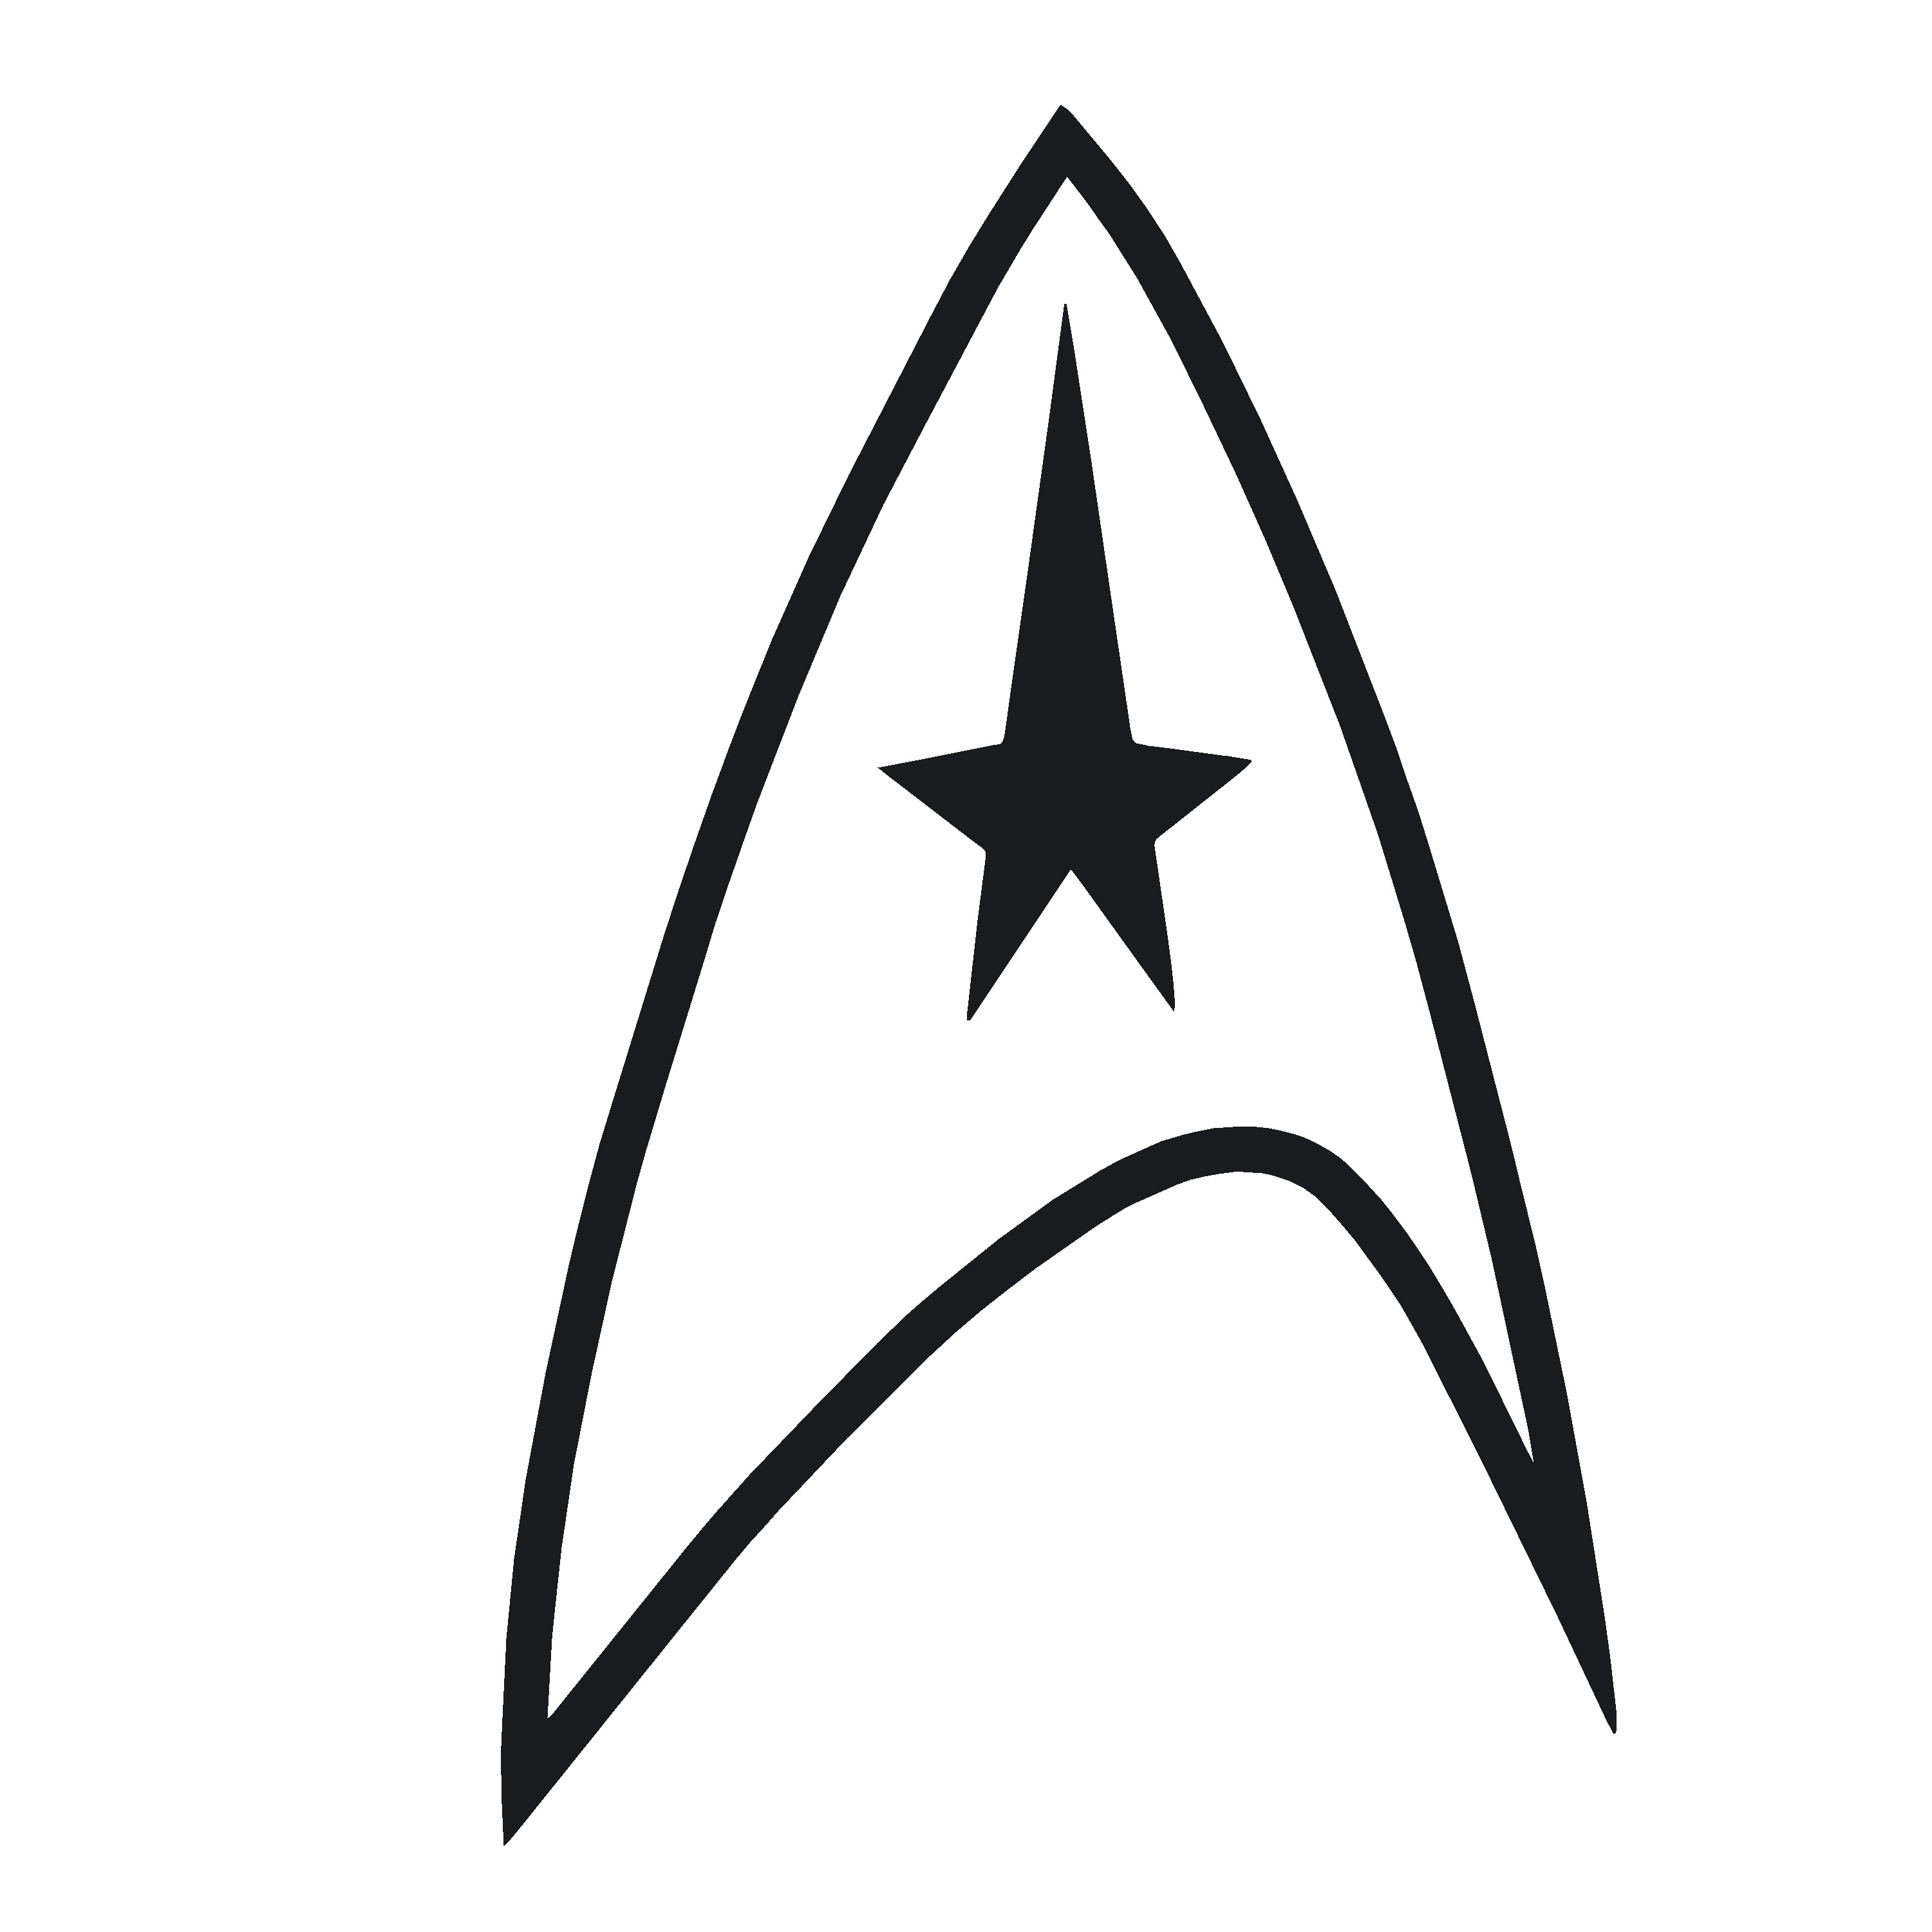 star trek symbol image